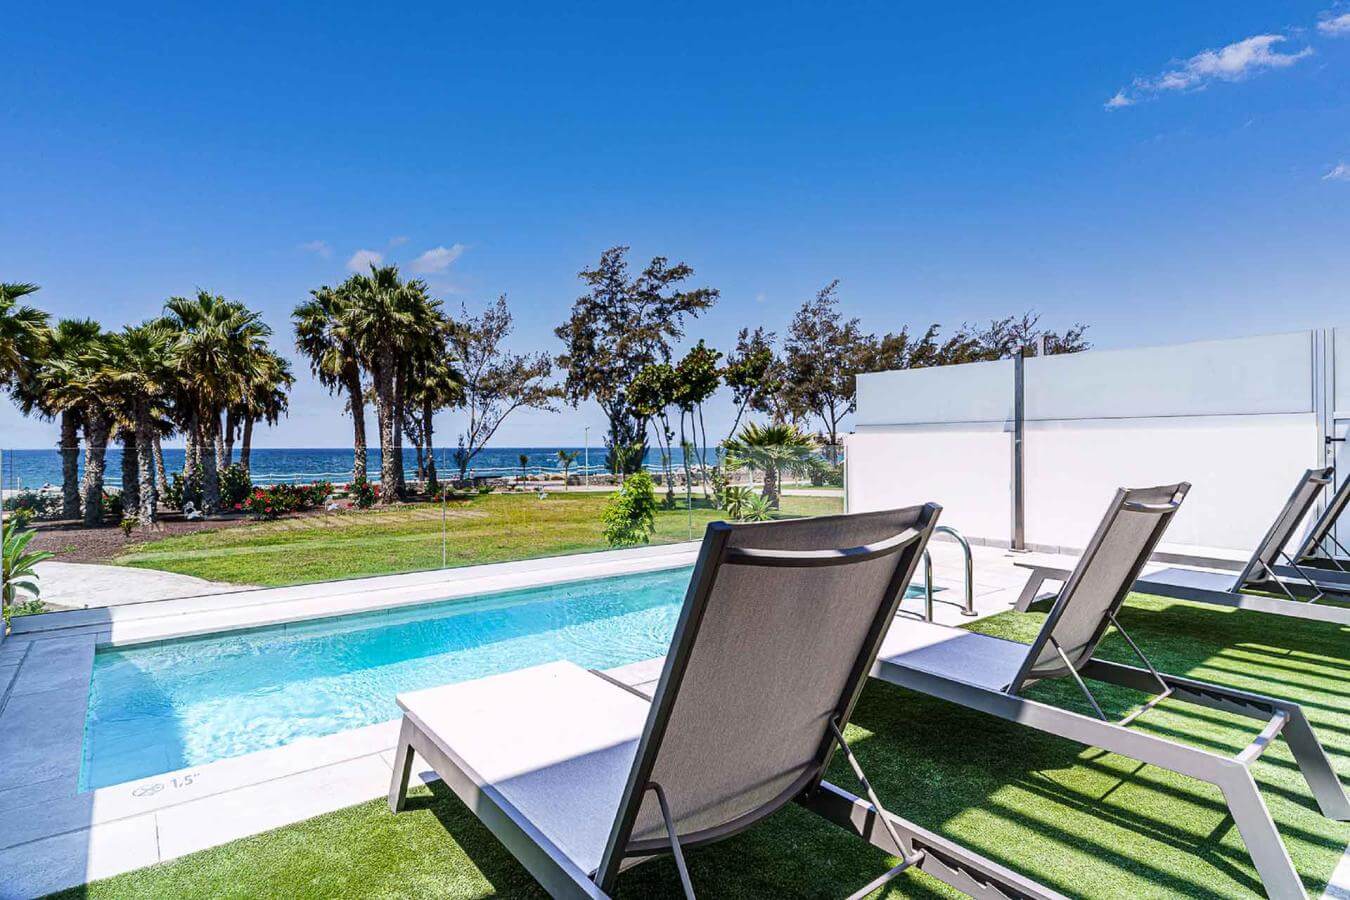 Resort Cordial Santa Águeda & Perchel Beach Club